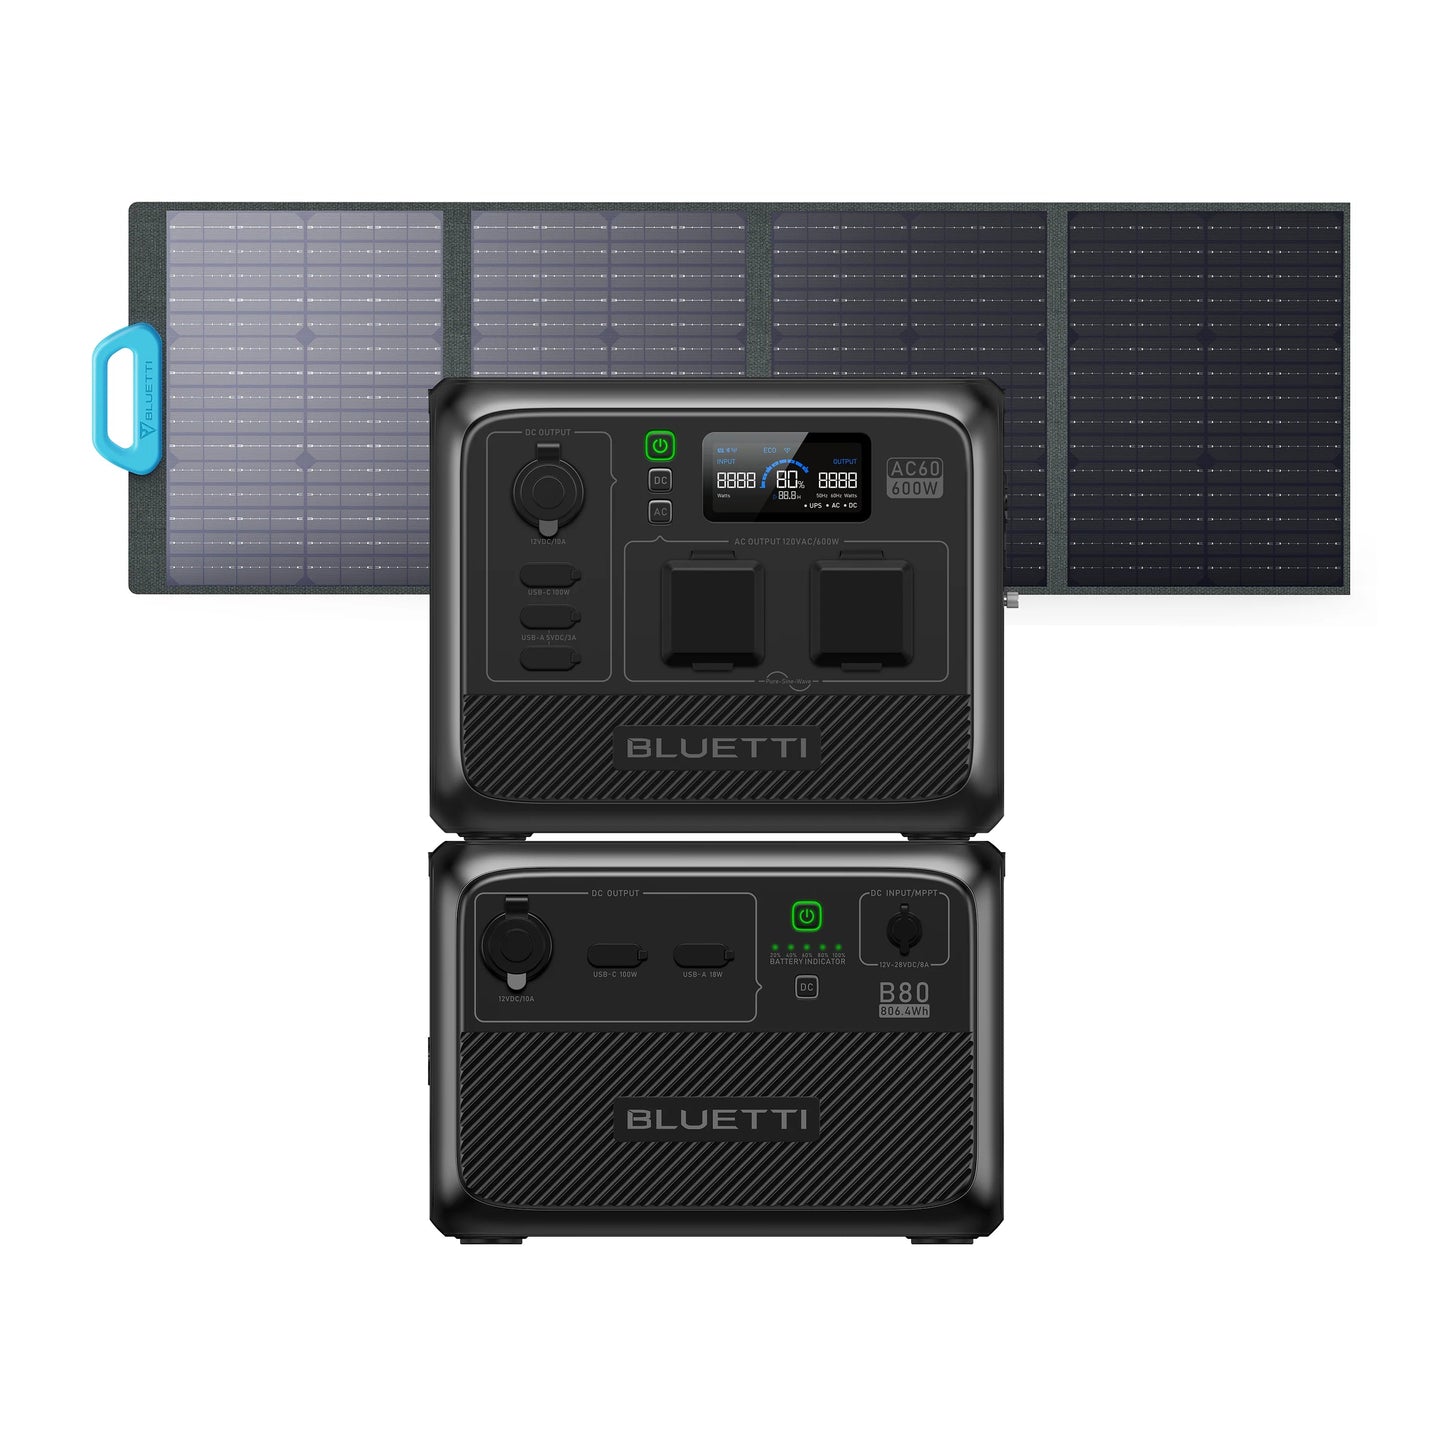 BLUETTI |AC60 Portable Power Station 600W,403Wh-EcoPowerit